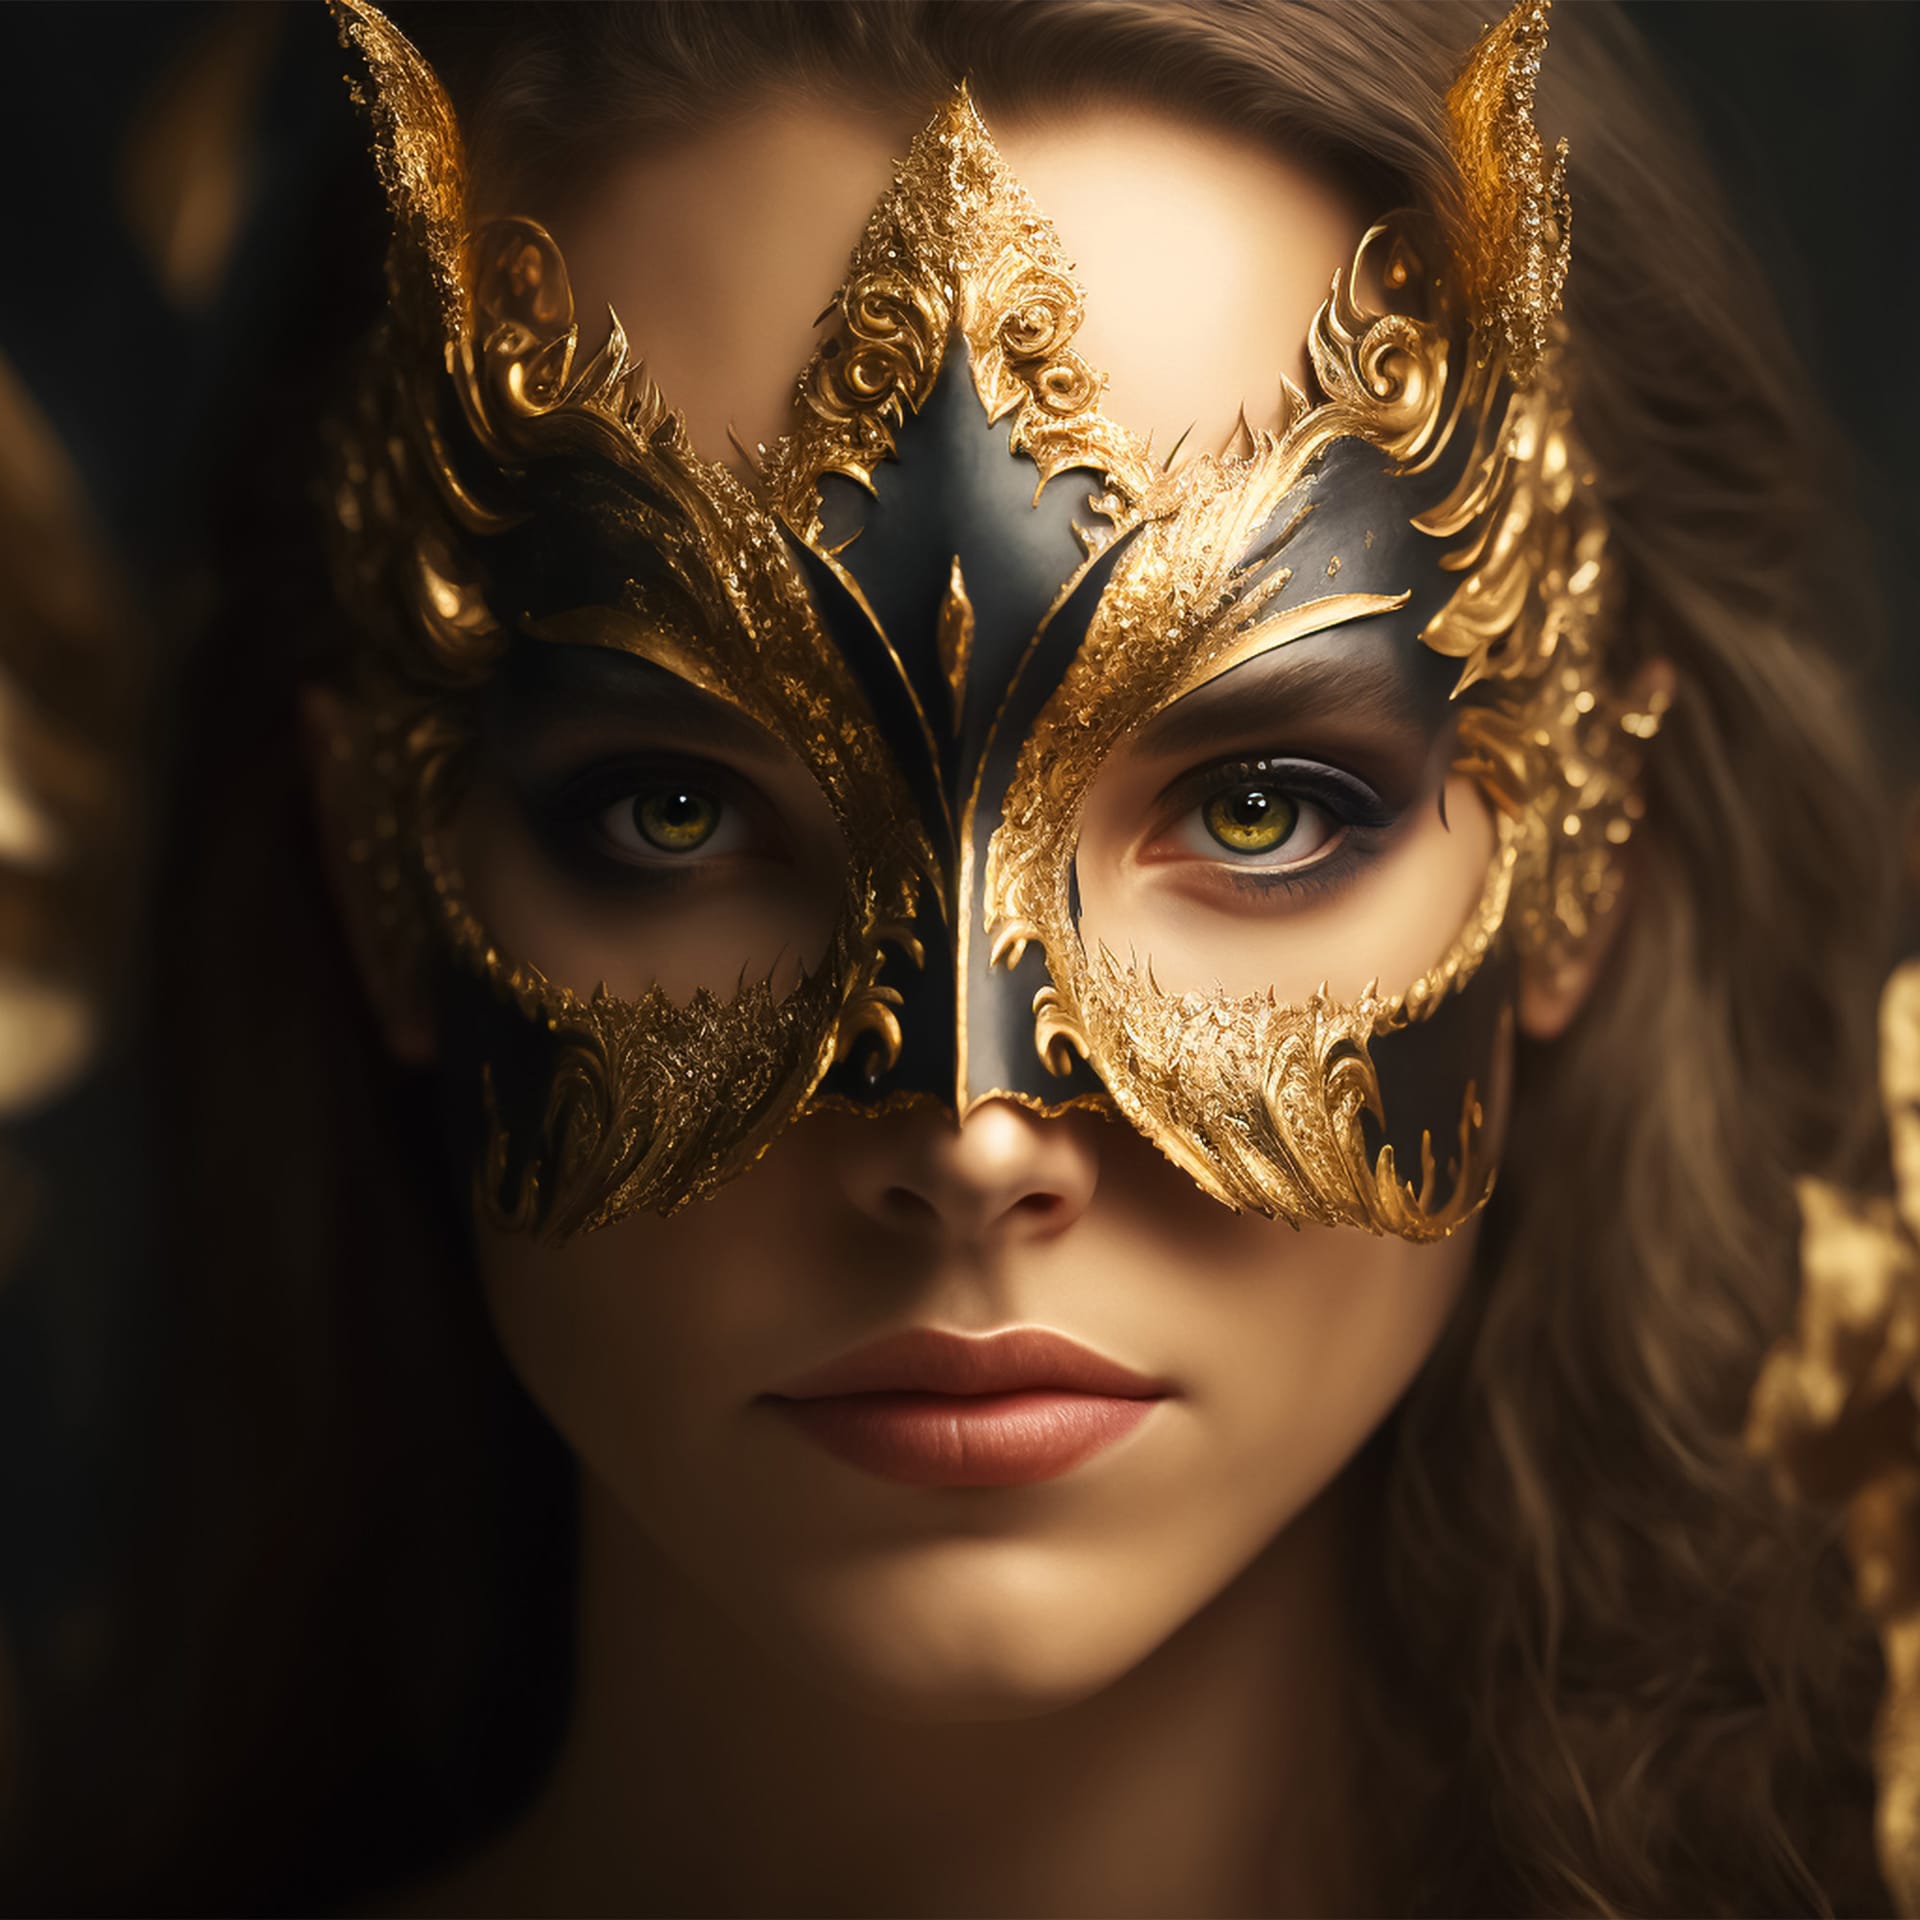 Beautiful woman front view wearing carnival gold mask